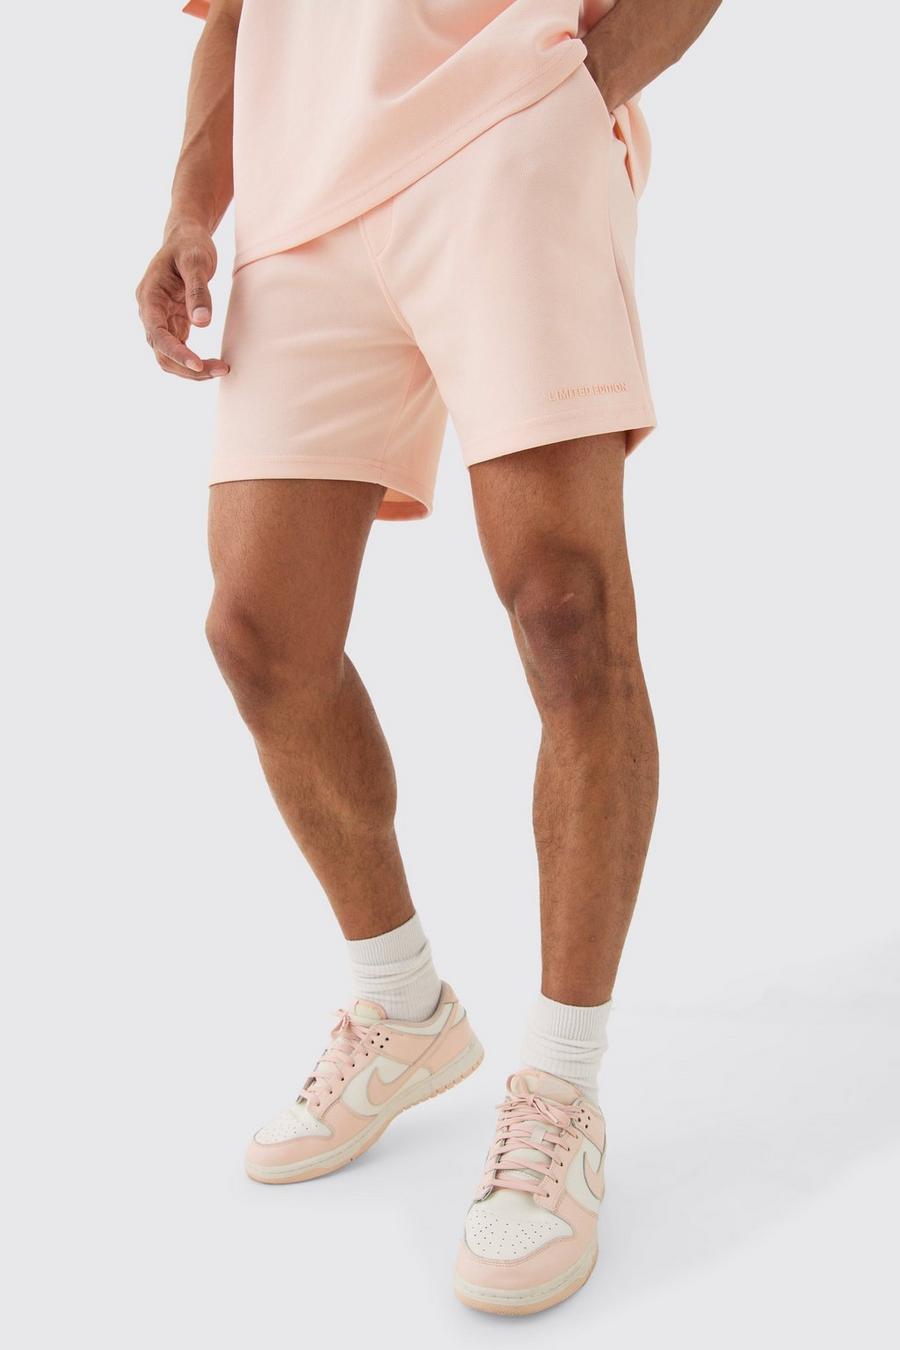 Lockere Limited Pique Shorts, Pink